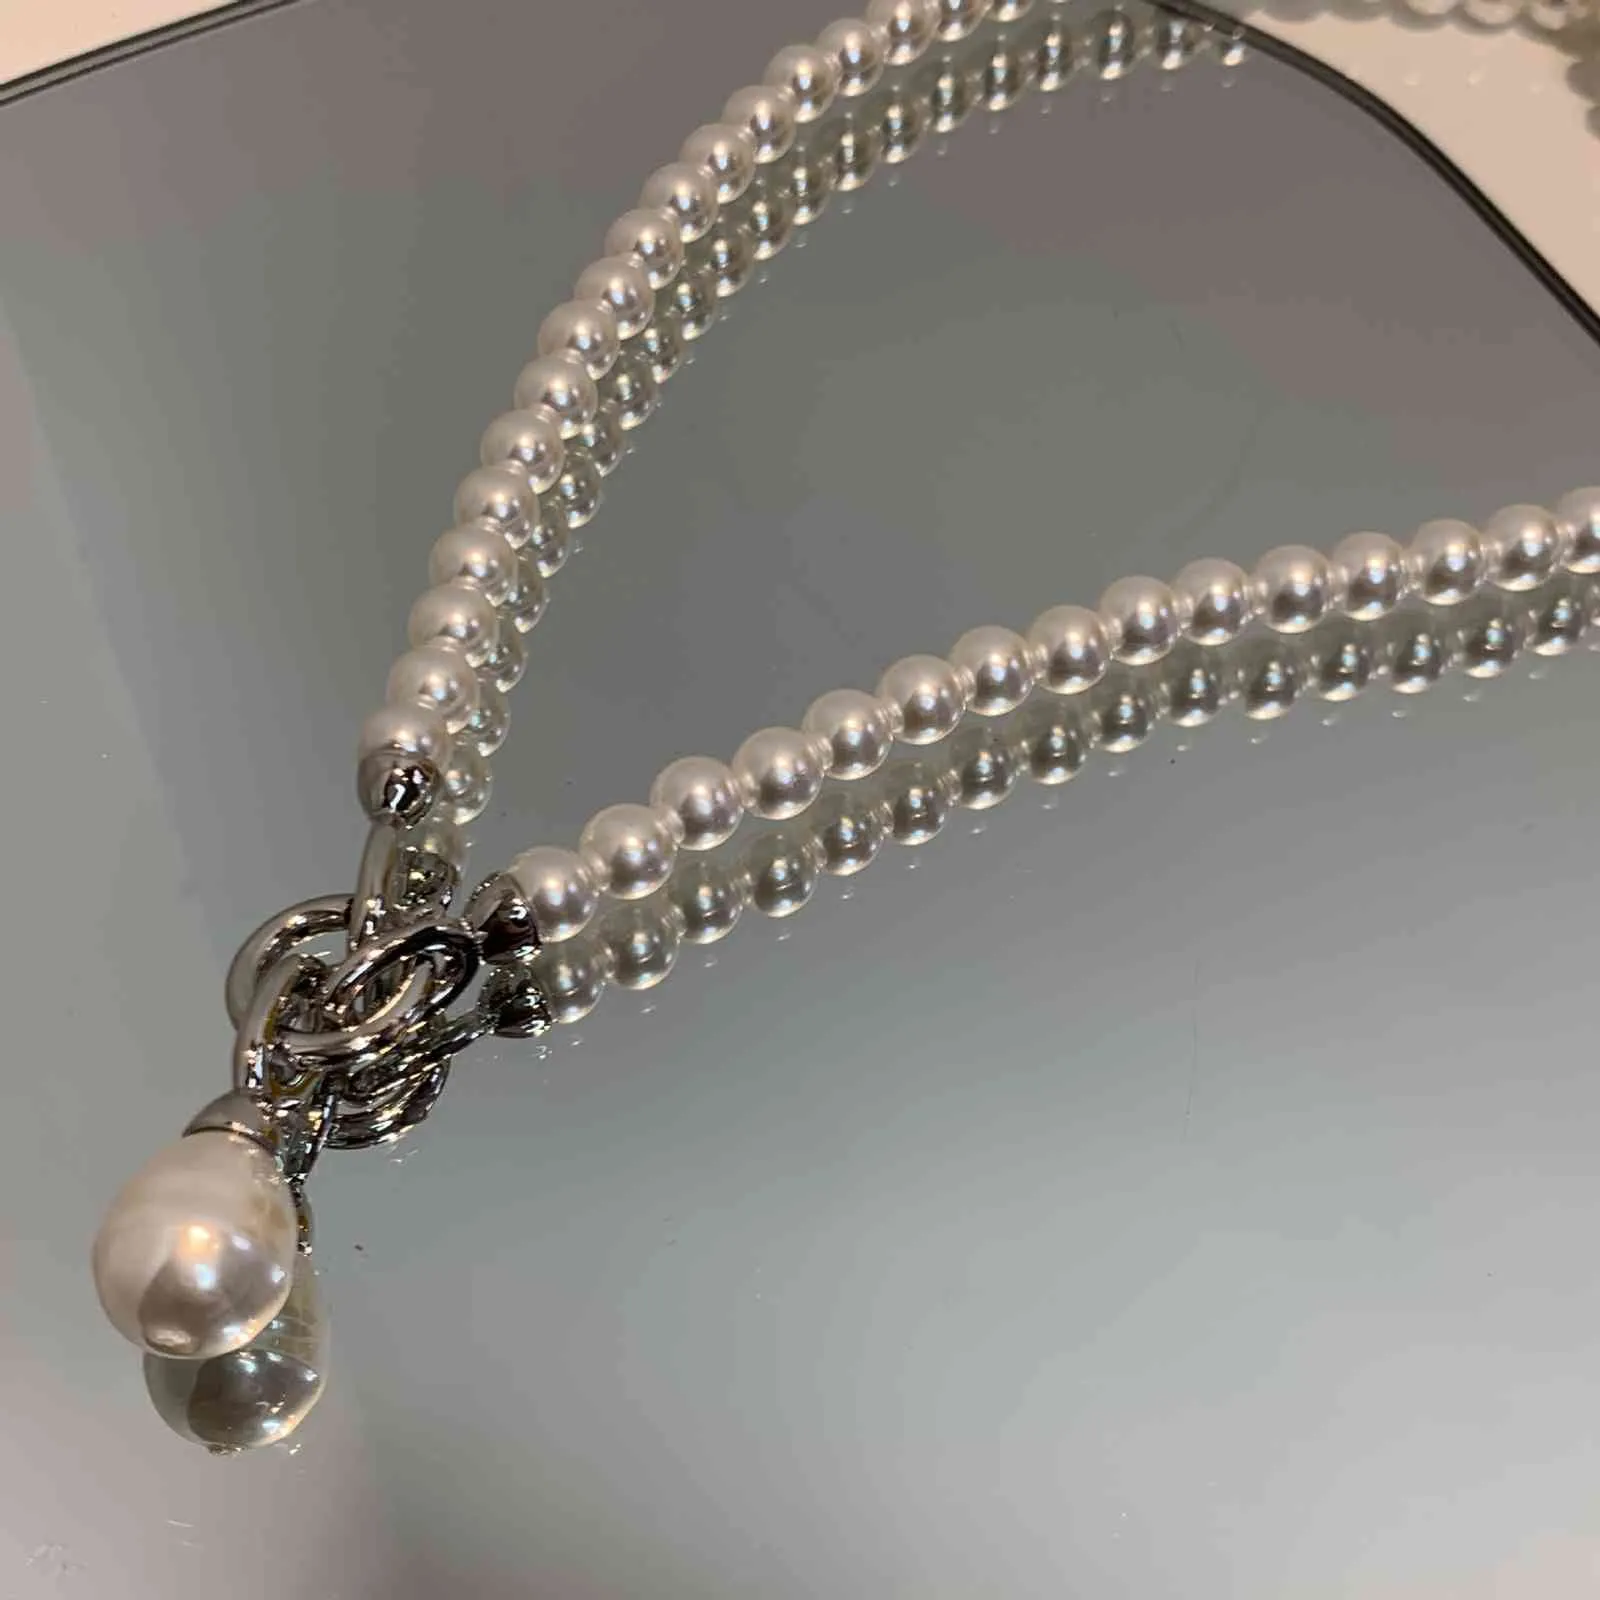 Trendy Design Niche AvantGarde Body Pearl Drop Pendant Necklace Suit Crossbody Simple Ornament Chain5138755